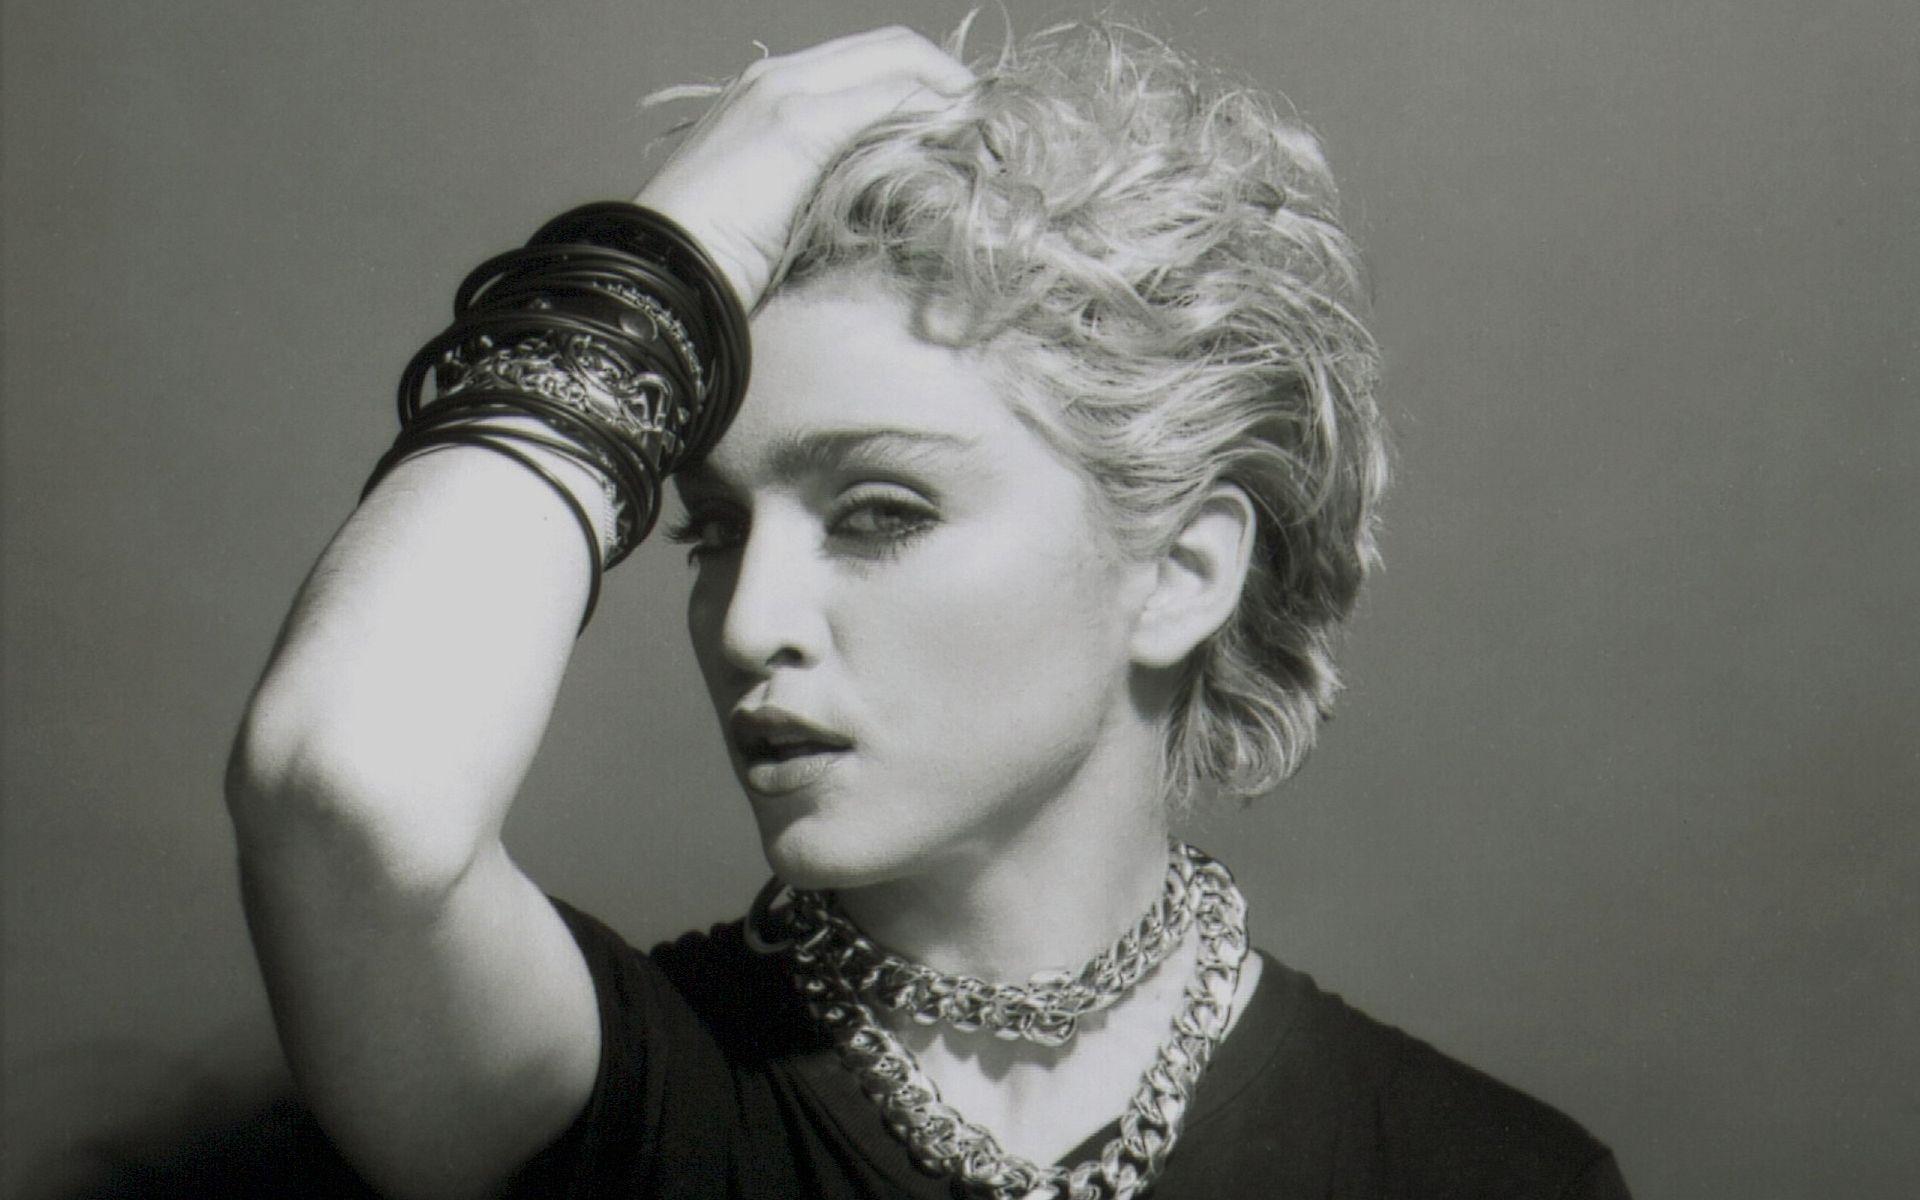 Madonna widescreen wallpaper wallpaper categories. STRIKE THE POSE